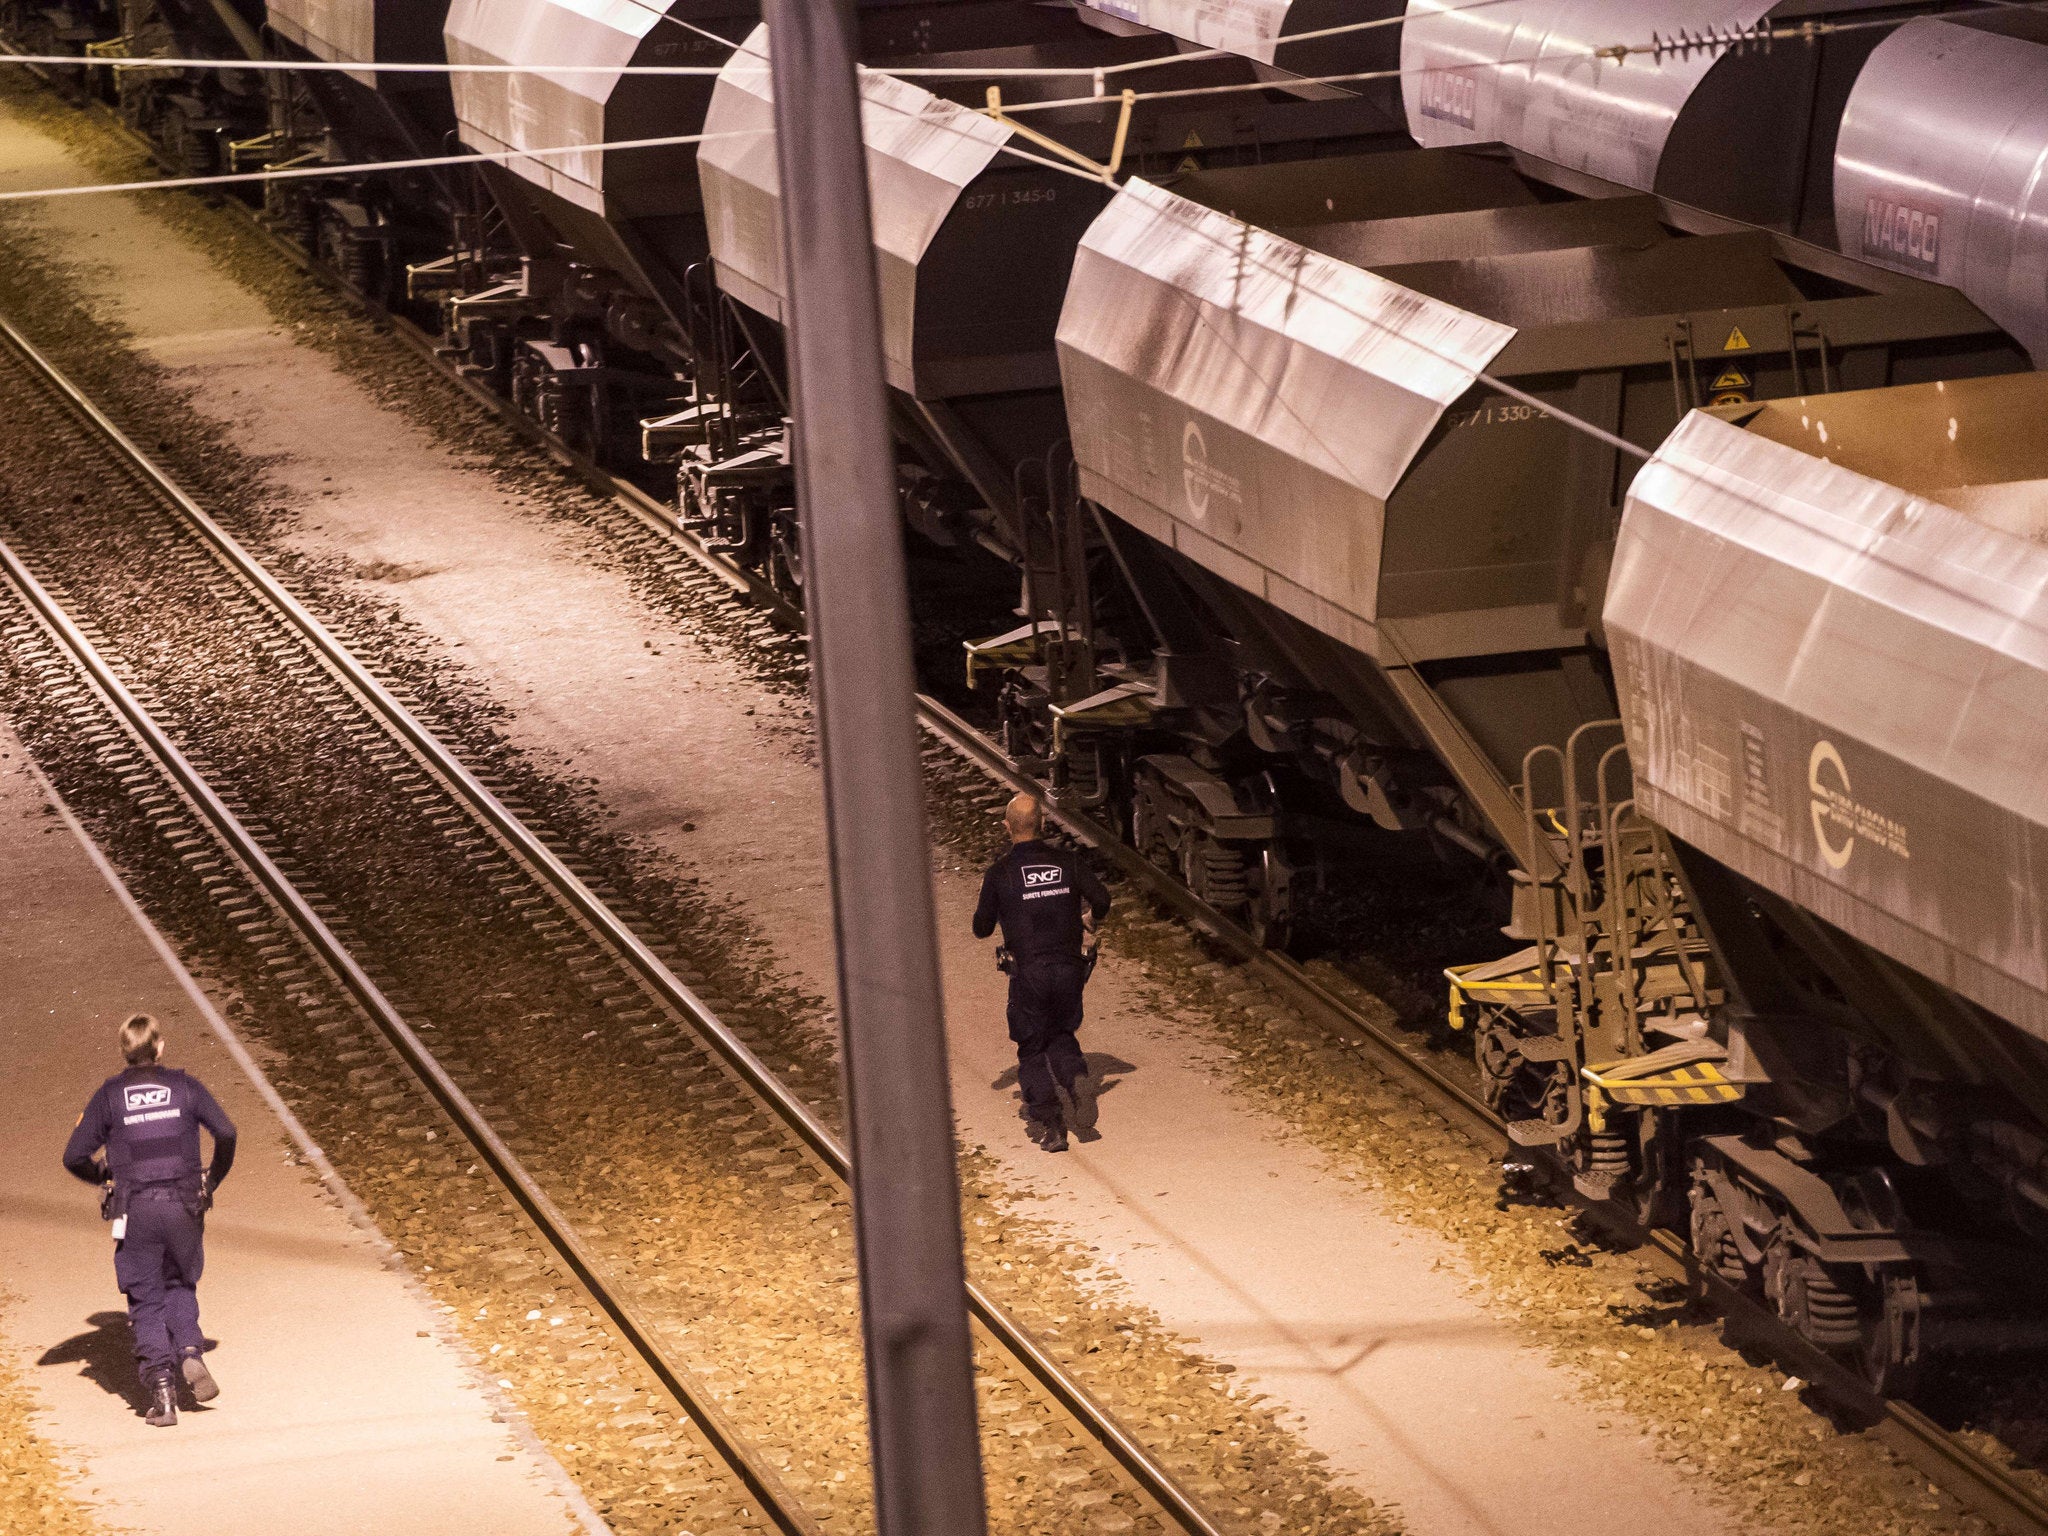 Security agents patrol a Eurotunnel train yard in Calais